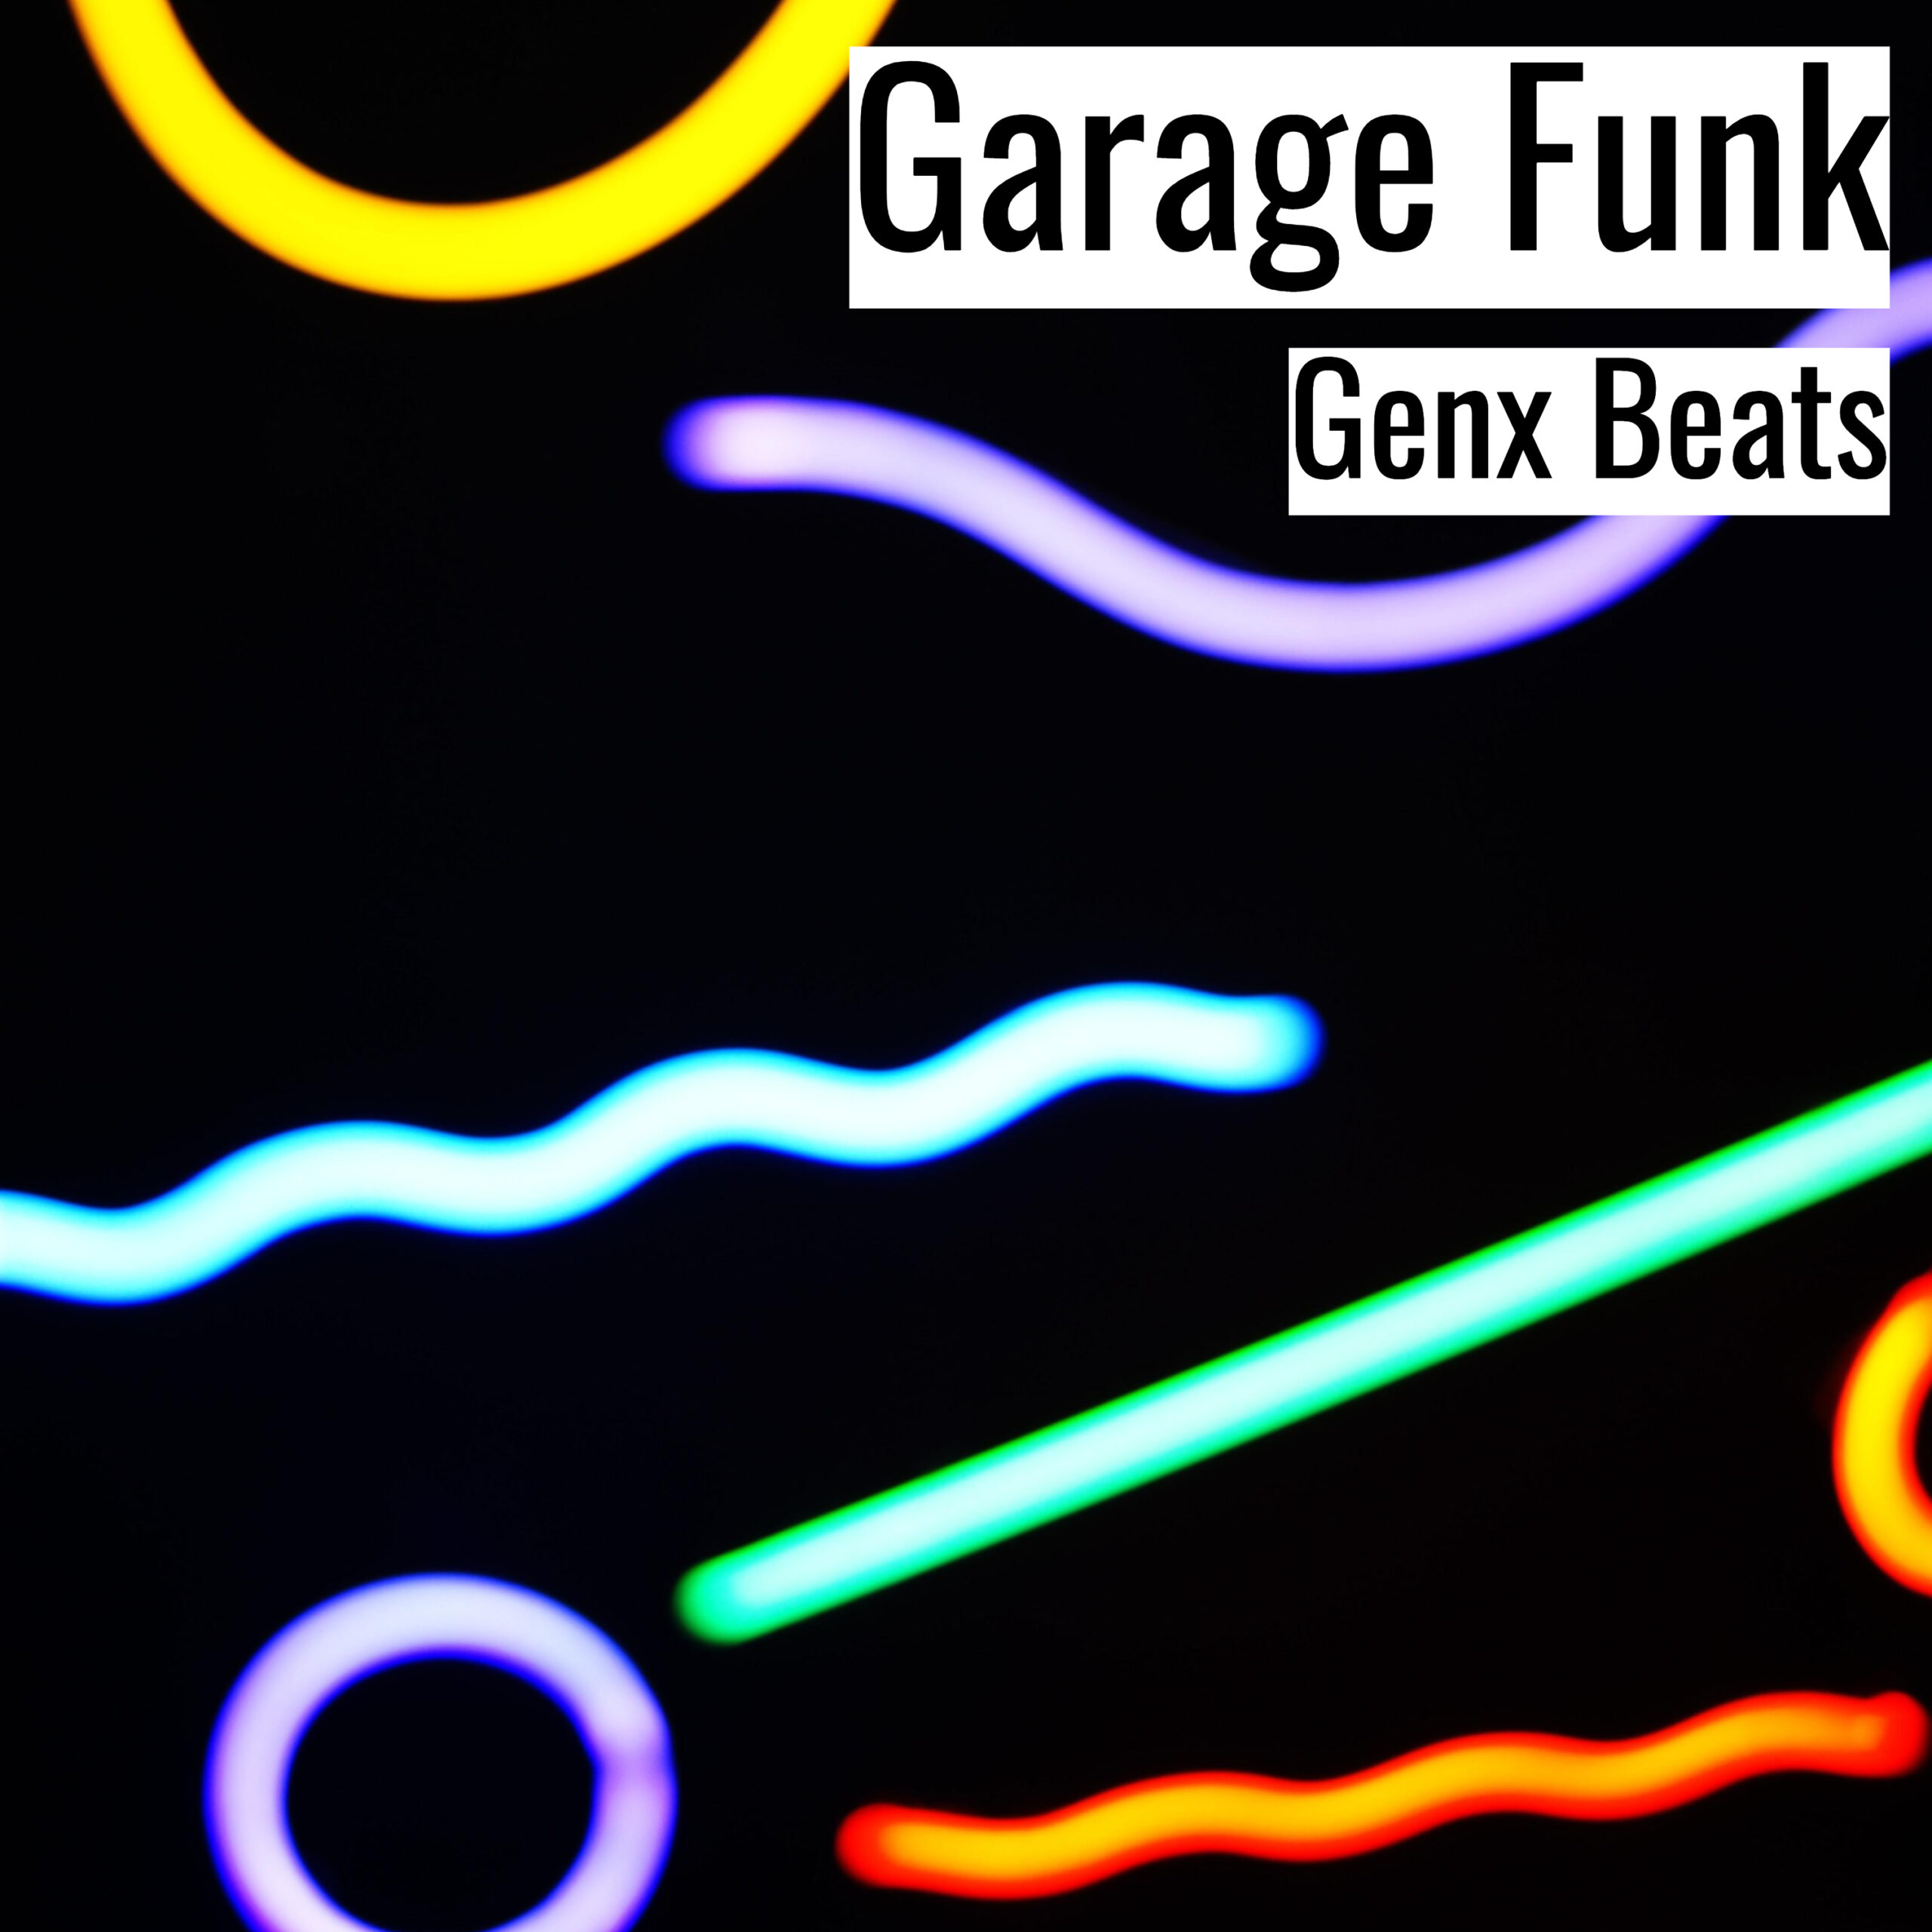 Garage Funk scaled